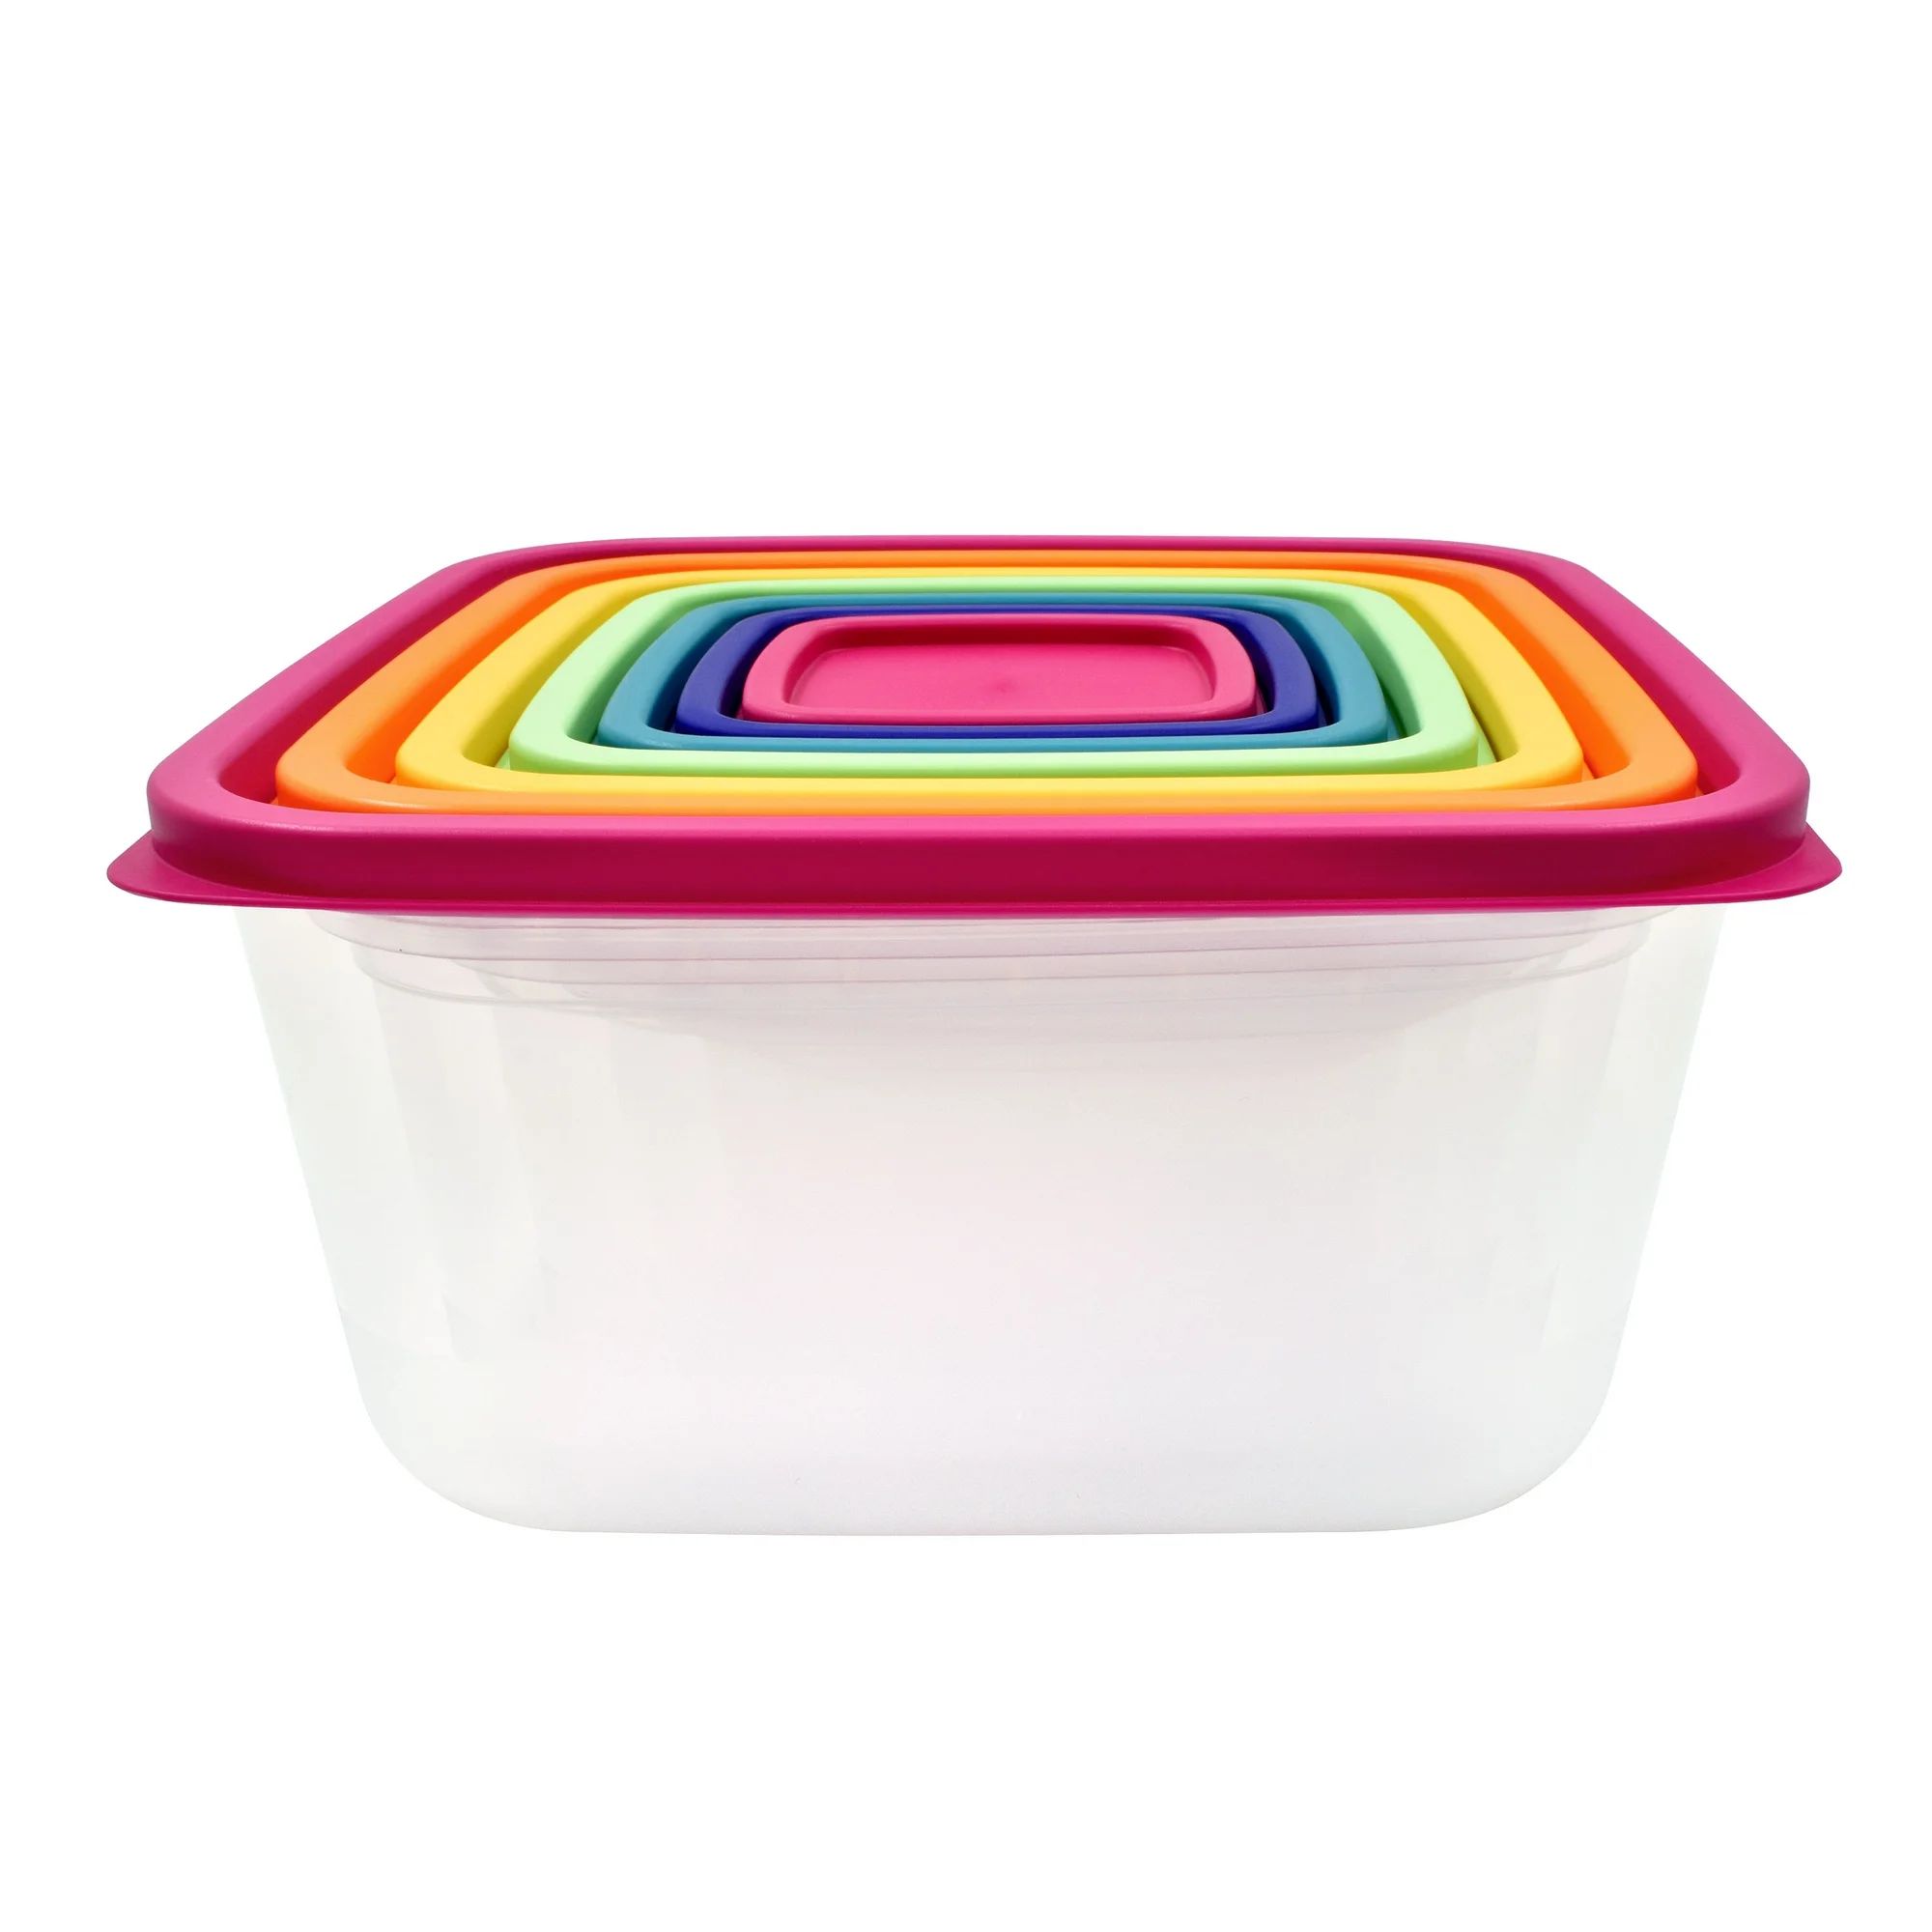 Mainstays 14 Piece Rainbow Plastic Food Storage Set, Pink Rainbow | Walmart (US)